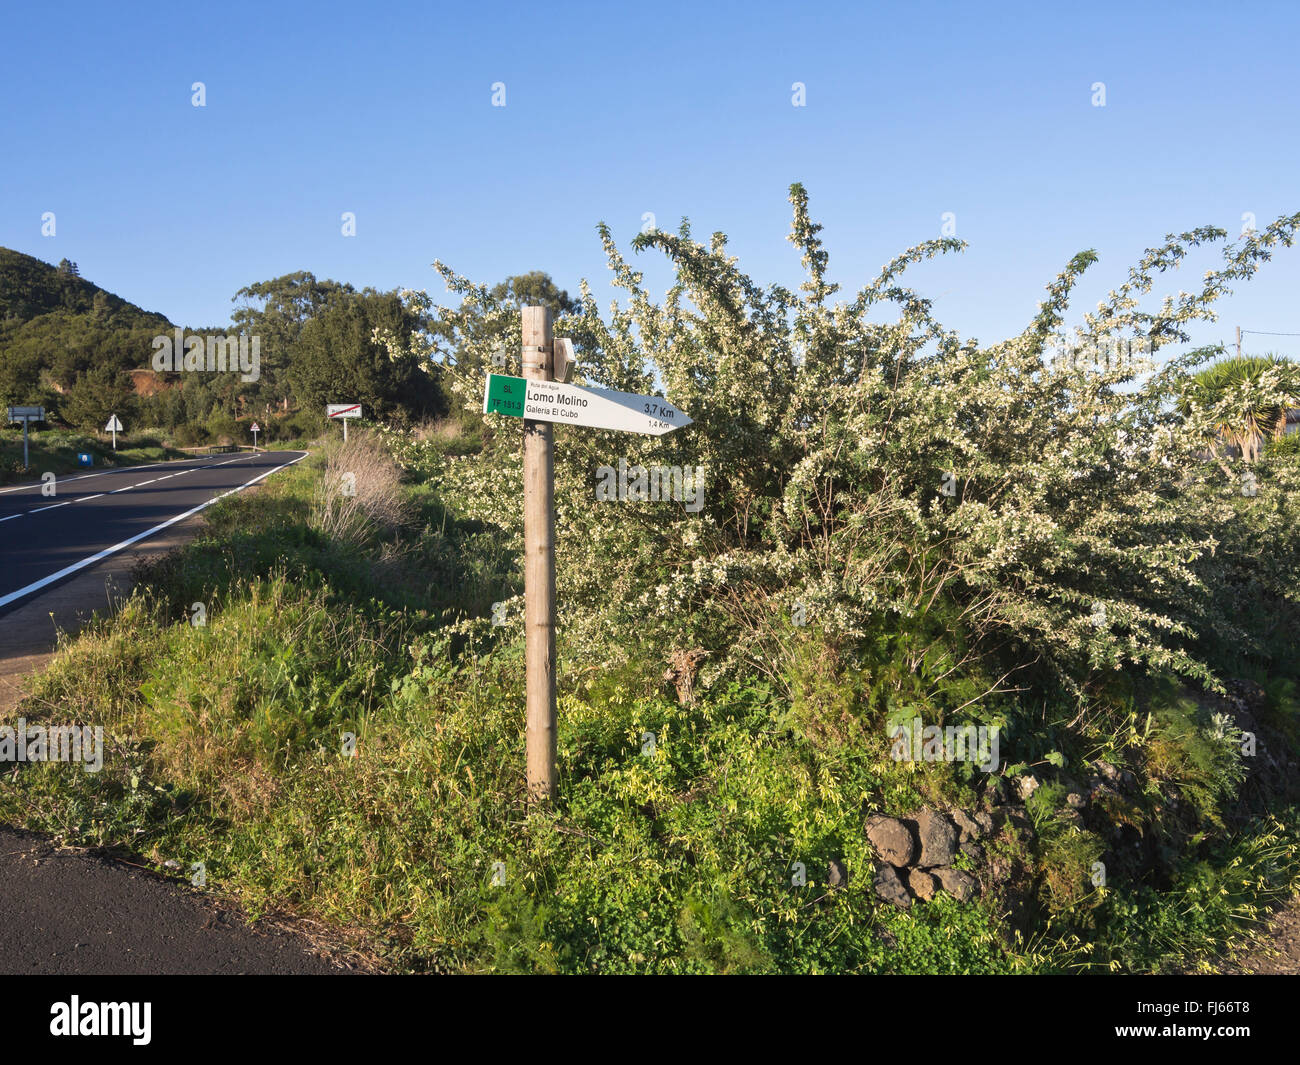 Starting point and signpost in Ruigomez, Tenerife Spain, for the Ruta del Agua hiking trail to El Tanque via Lomo Molino Stock Photo